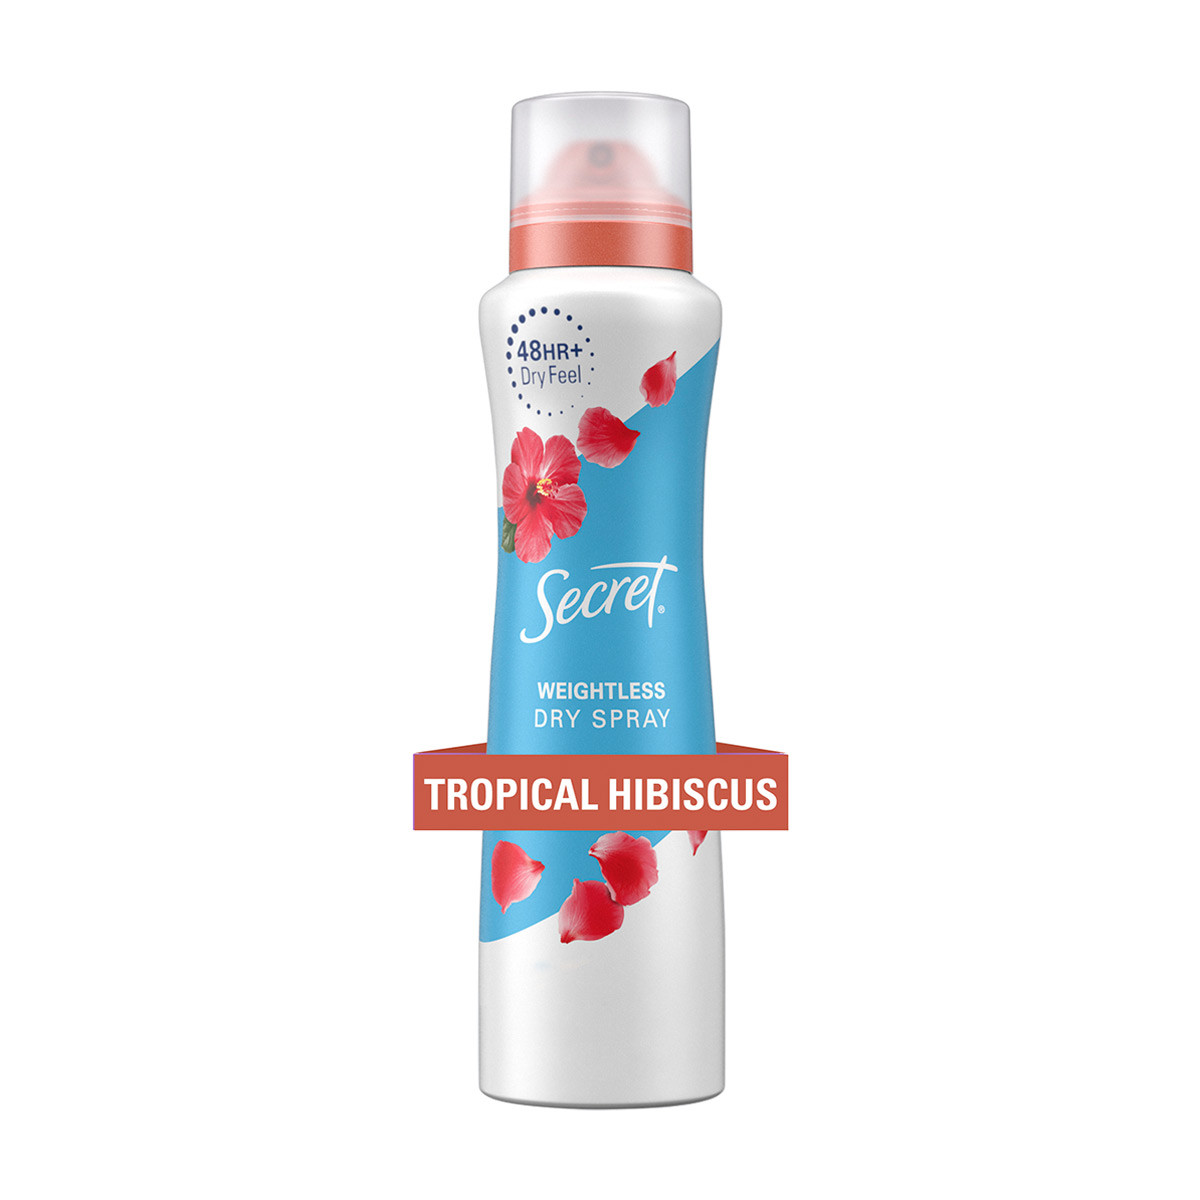 Secret Antiperspirant Dry Spray, Tropical Hibiscus and Argan Oil, 4.1 oz